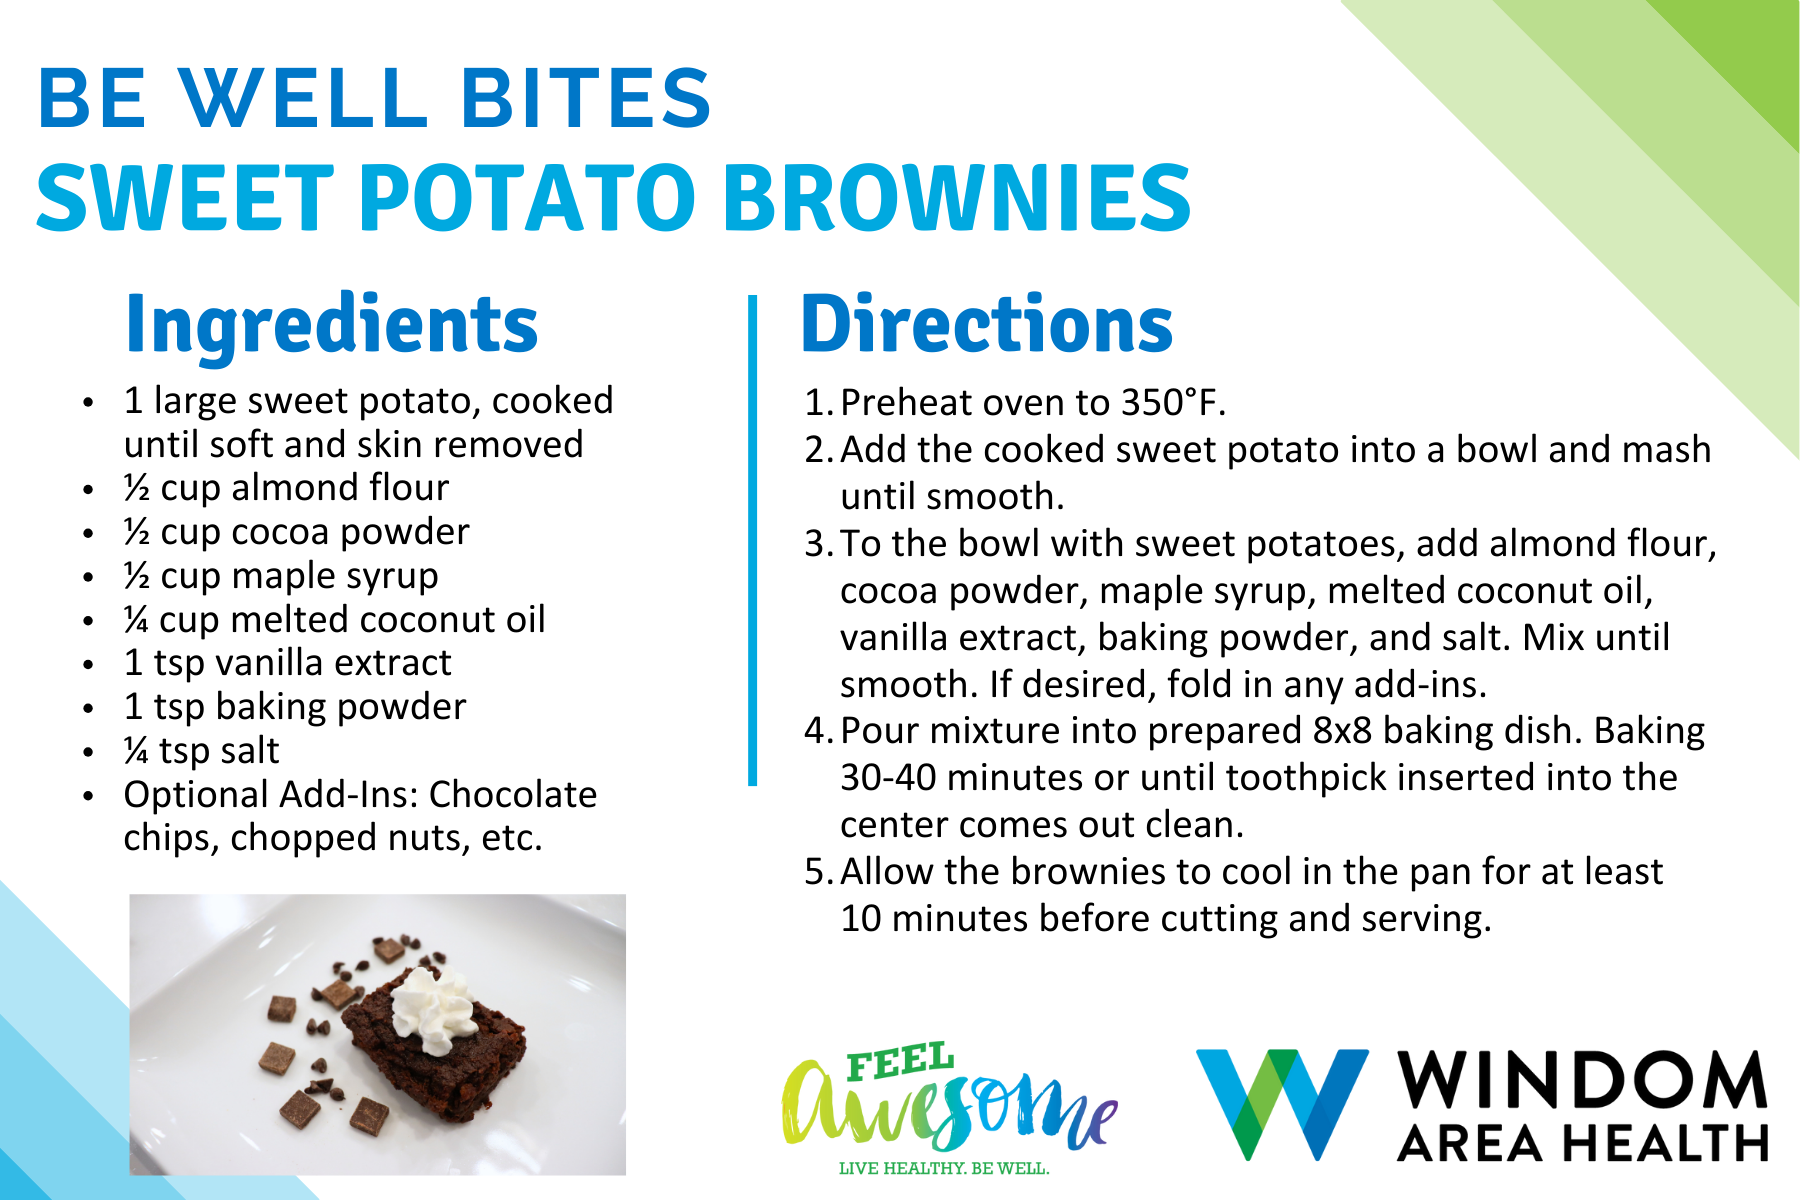 Be Well Bites Sweet Potato Brownie Recipe Card